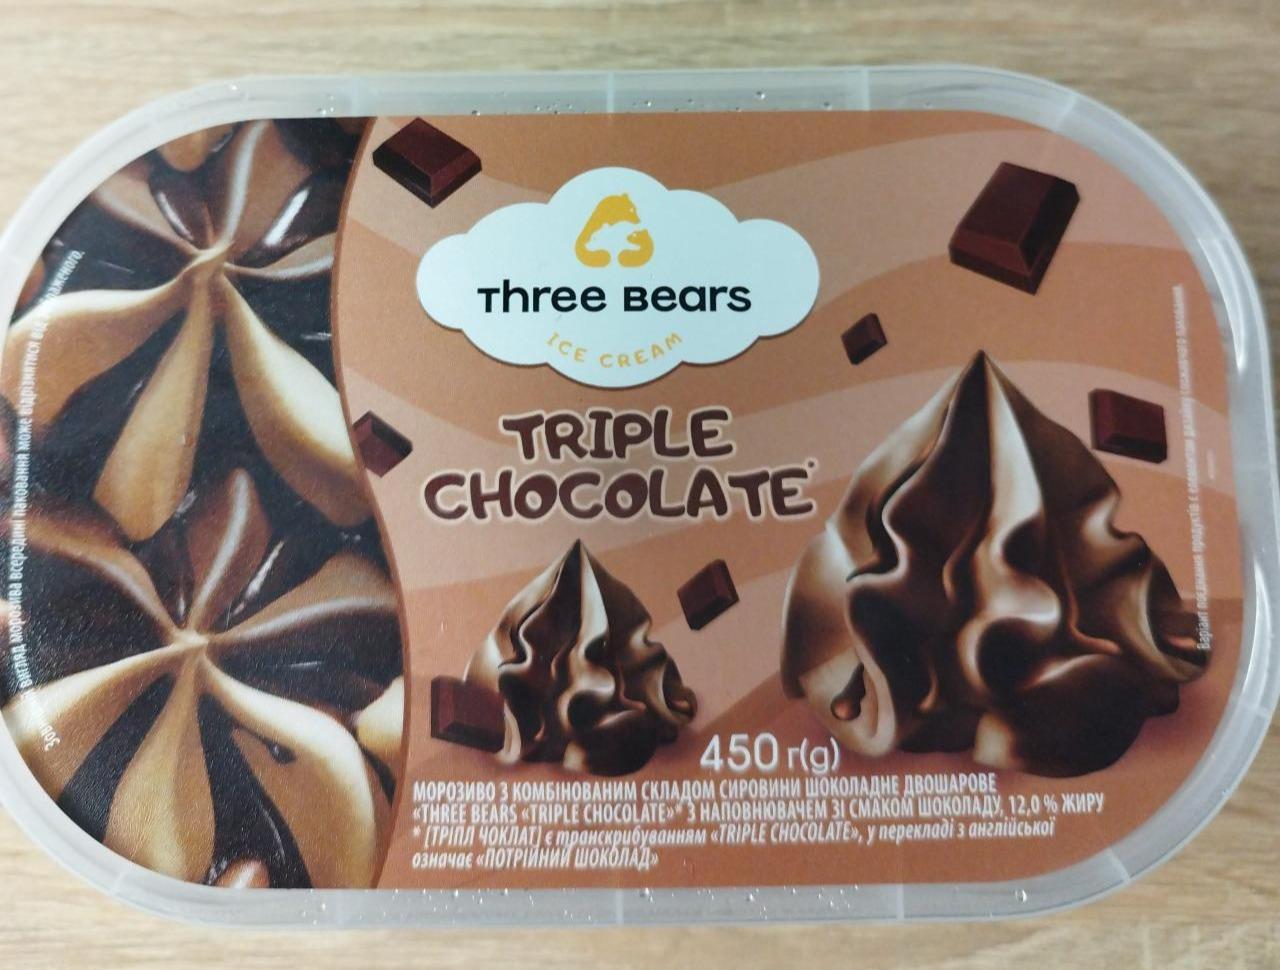 Фото - Мороженое 12% с наполнителем со вкусом шоколада Triple Chocolate Three Bears Три Медведя